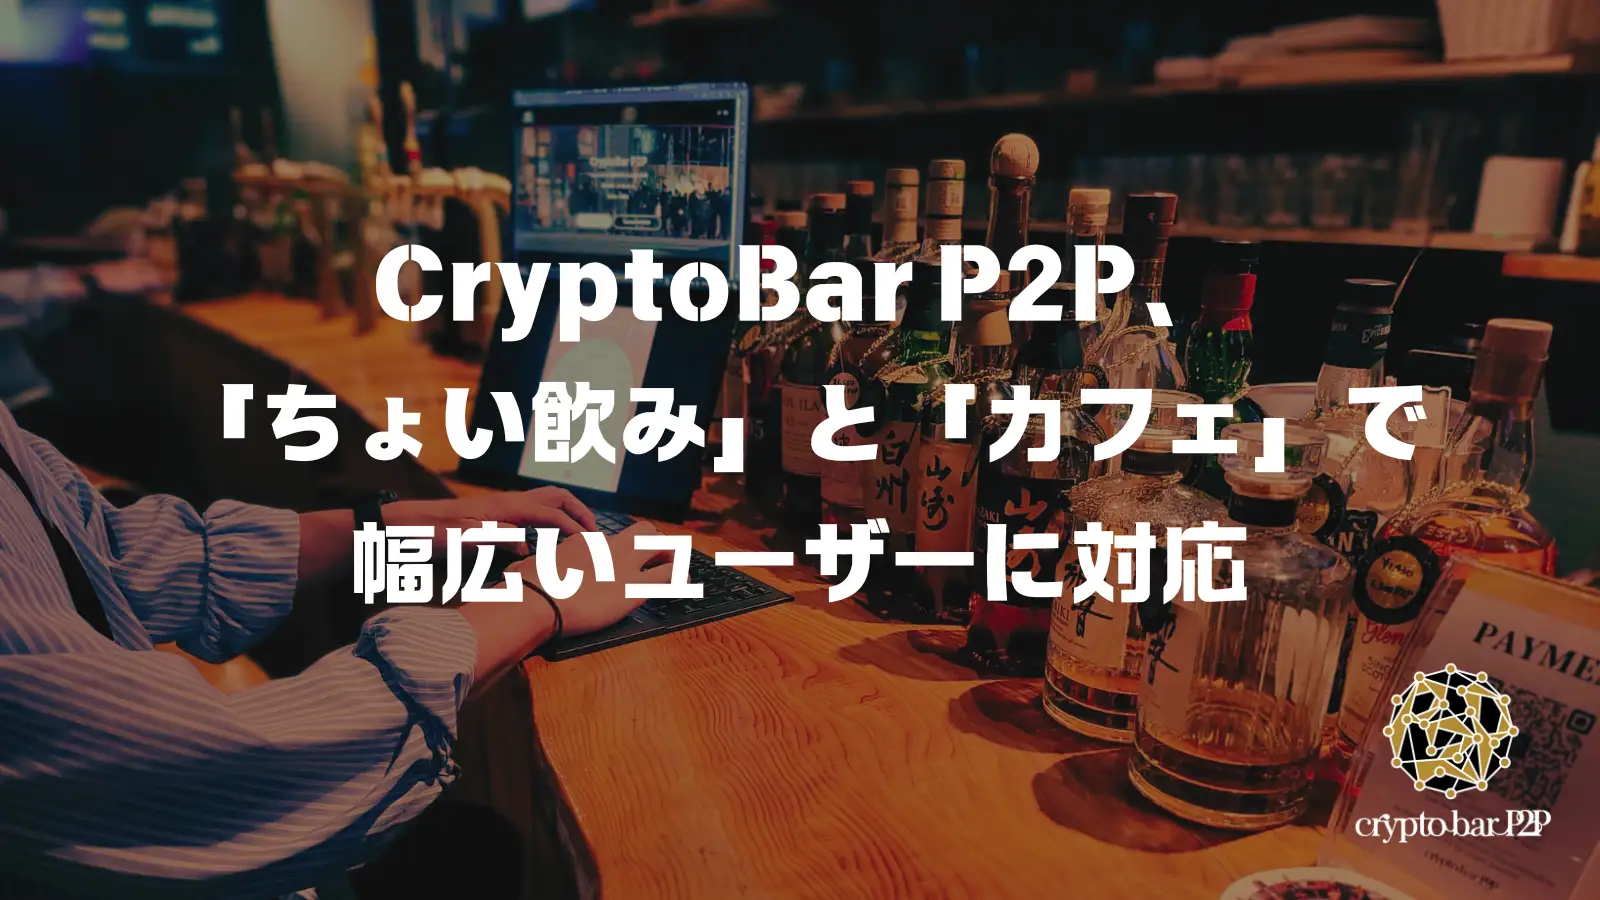 CryptoBar P2Pの新プランとカフェ営業開始